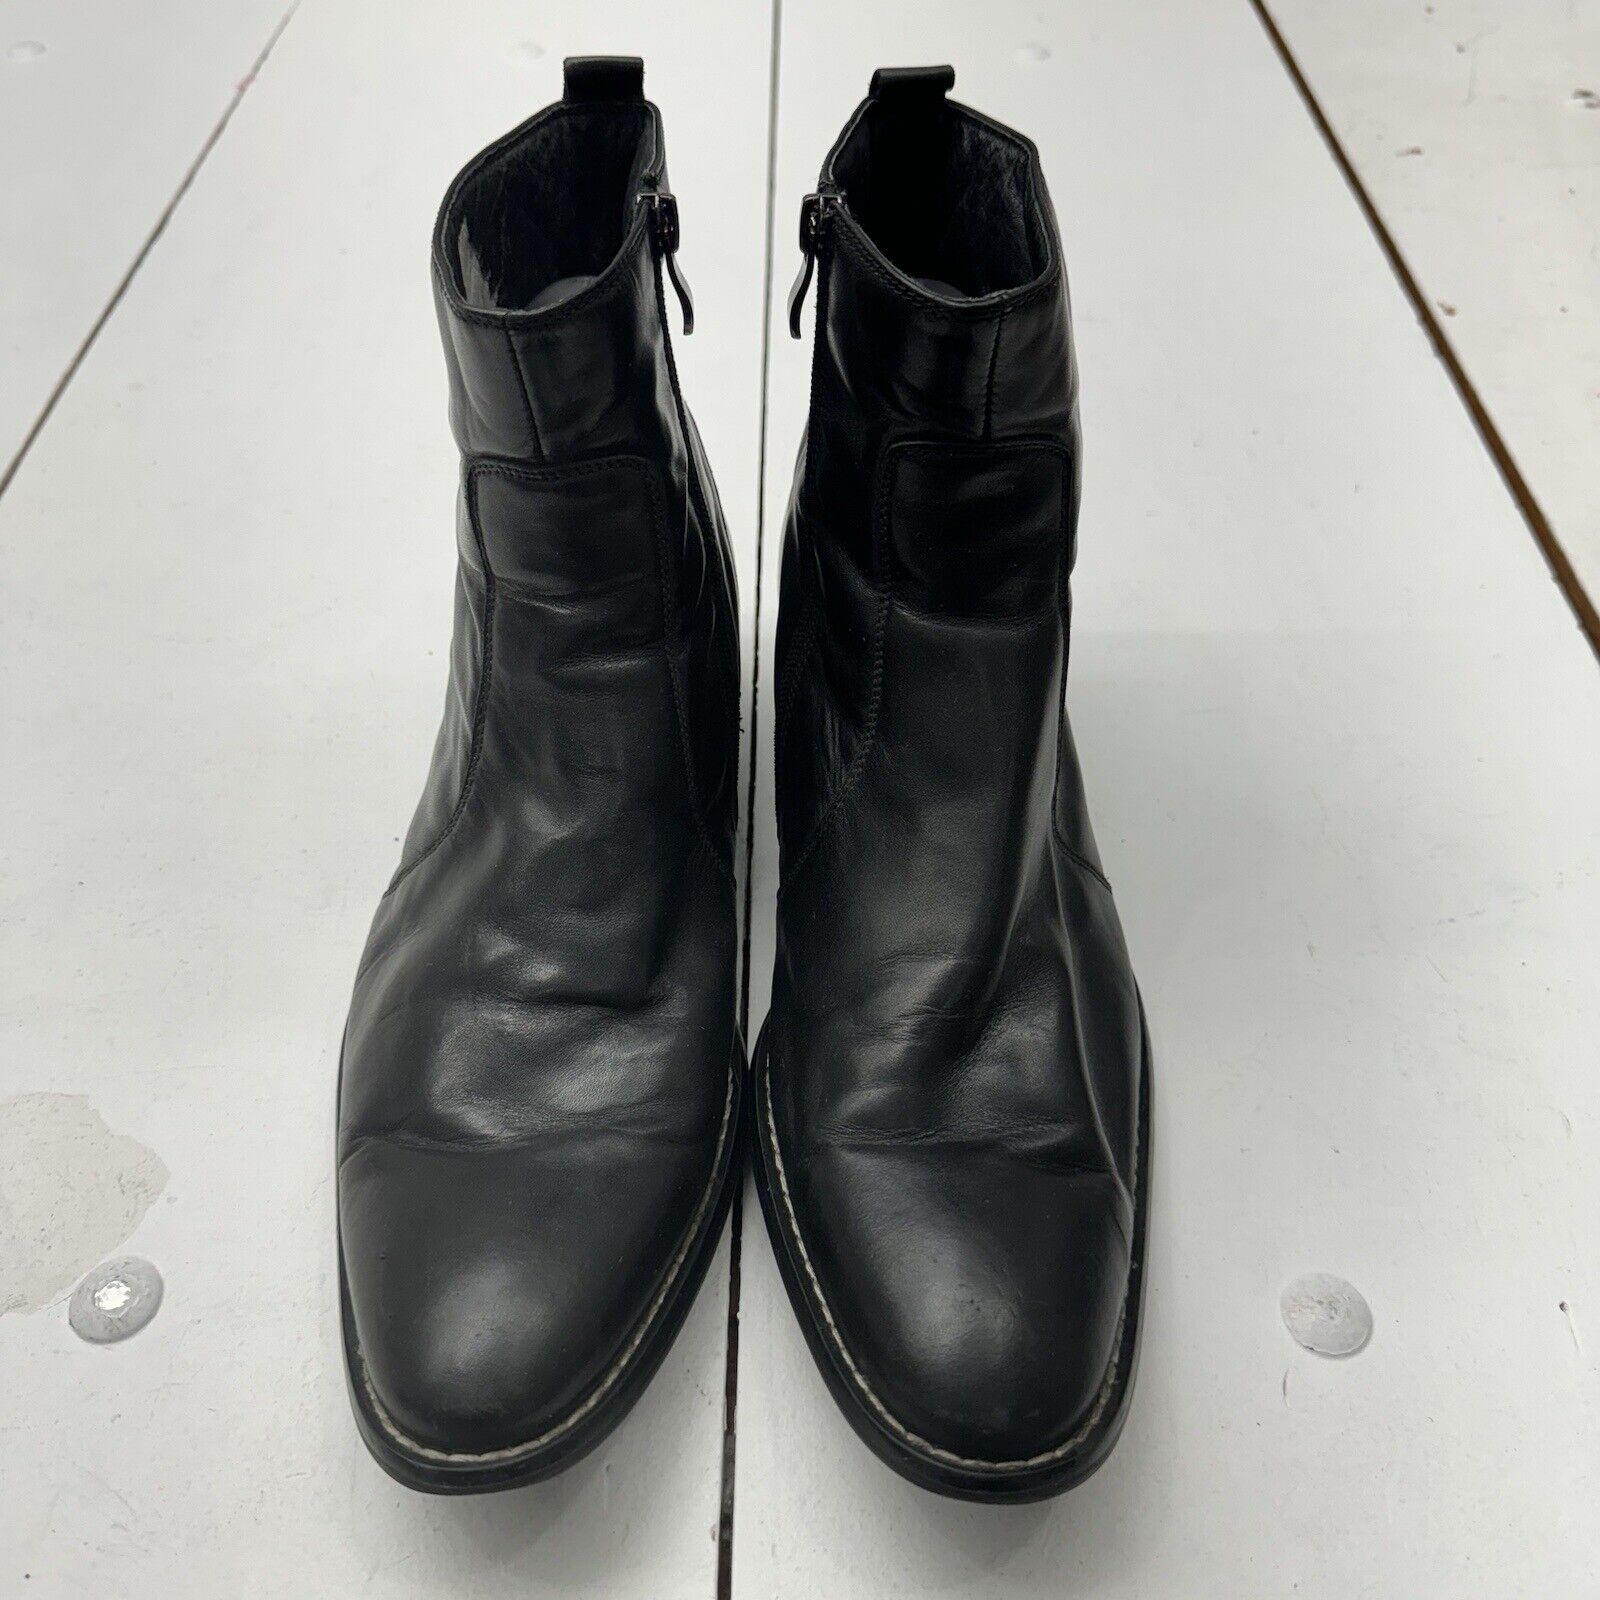 Dahlin Black Leather Boots Slip On Zip Up 8953-6800 Men’s Size EUR 43 US 9